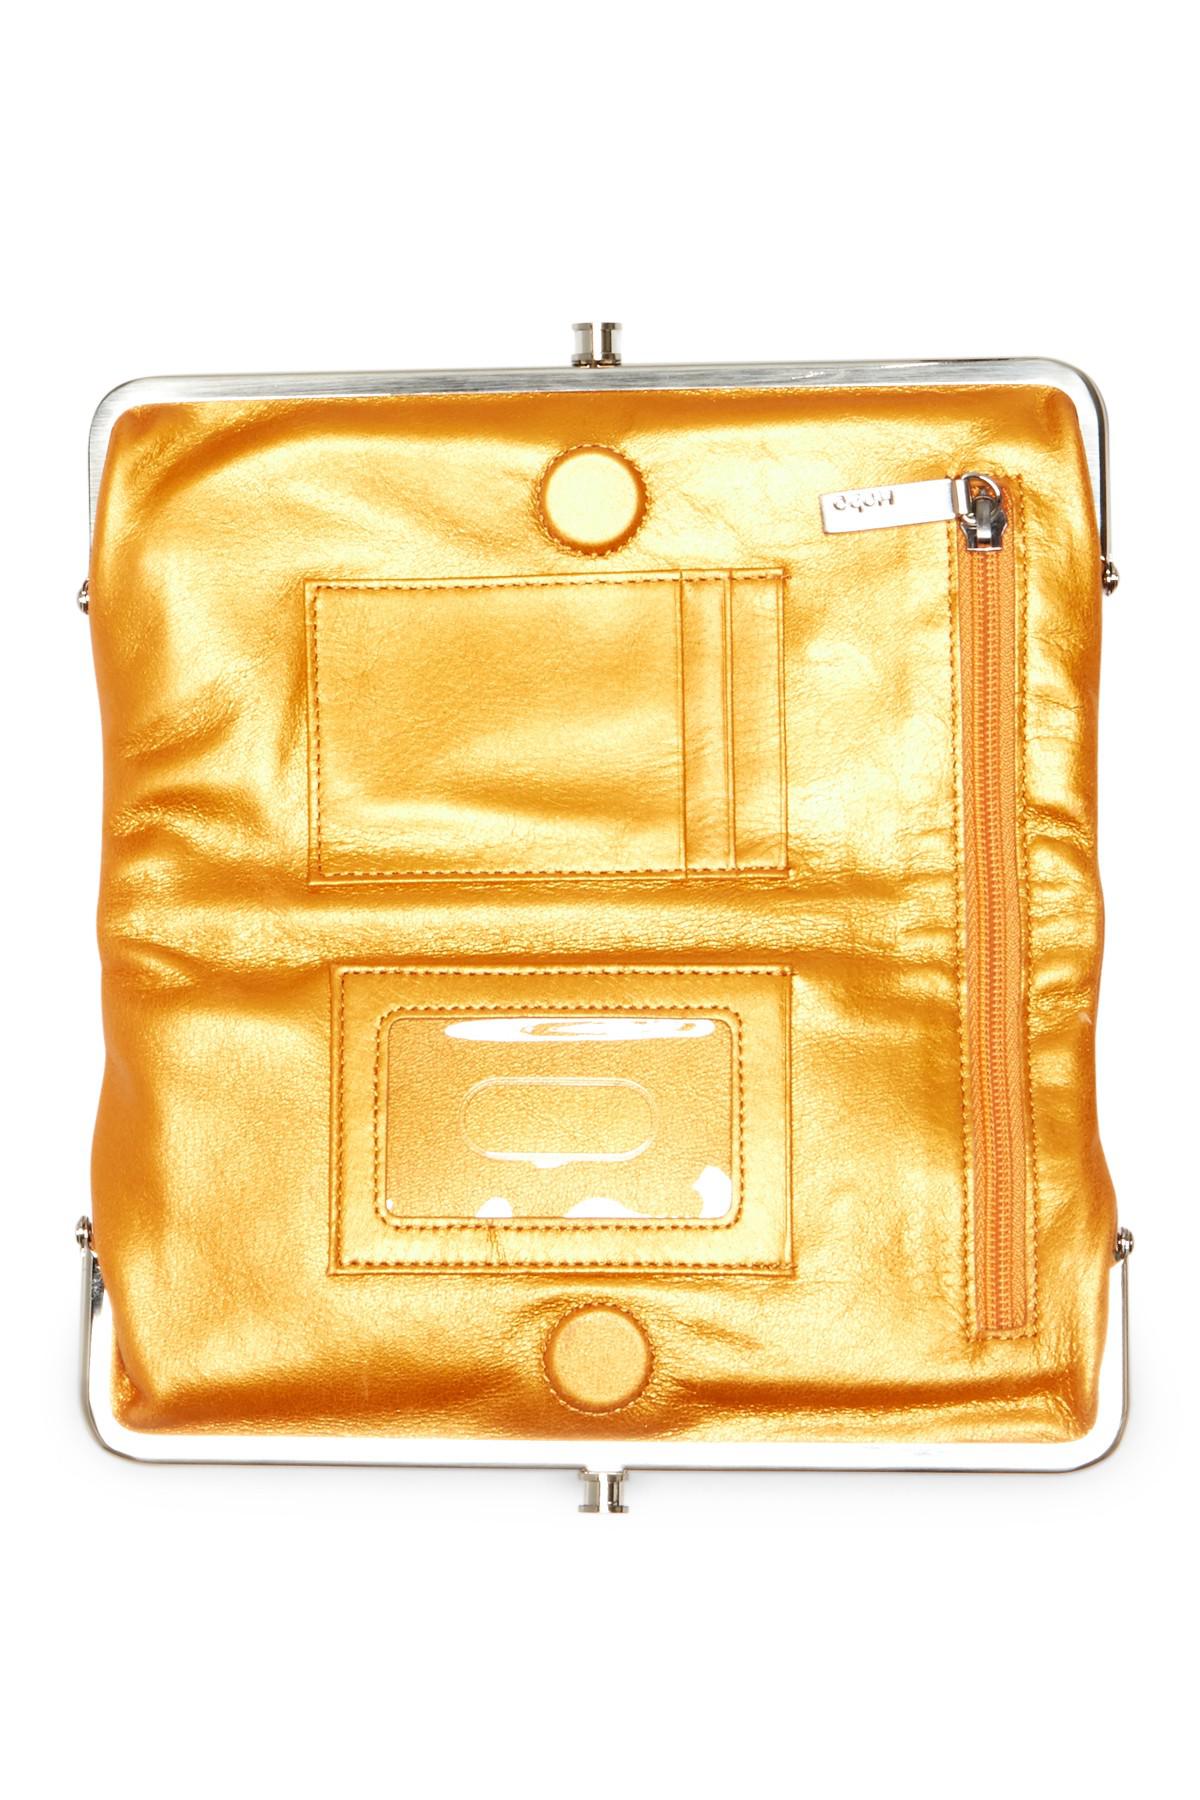 Hobo International Lauren Leather Clutch Wallet in Yellow